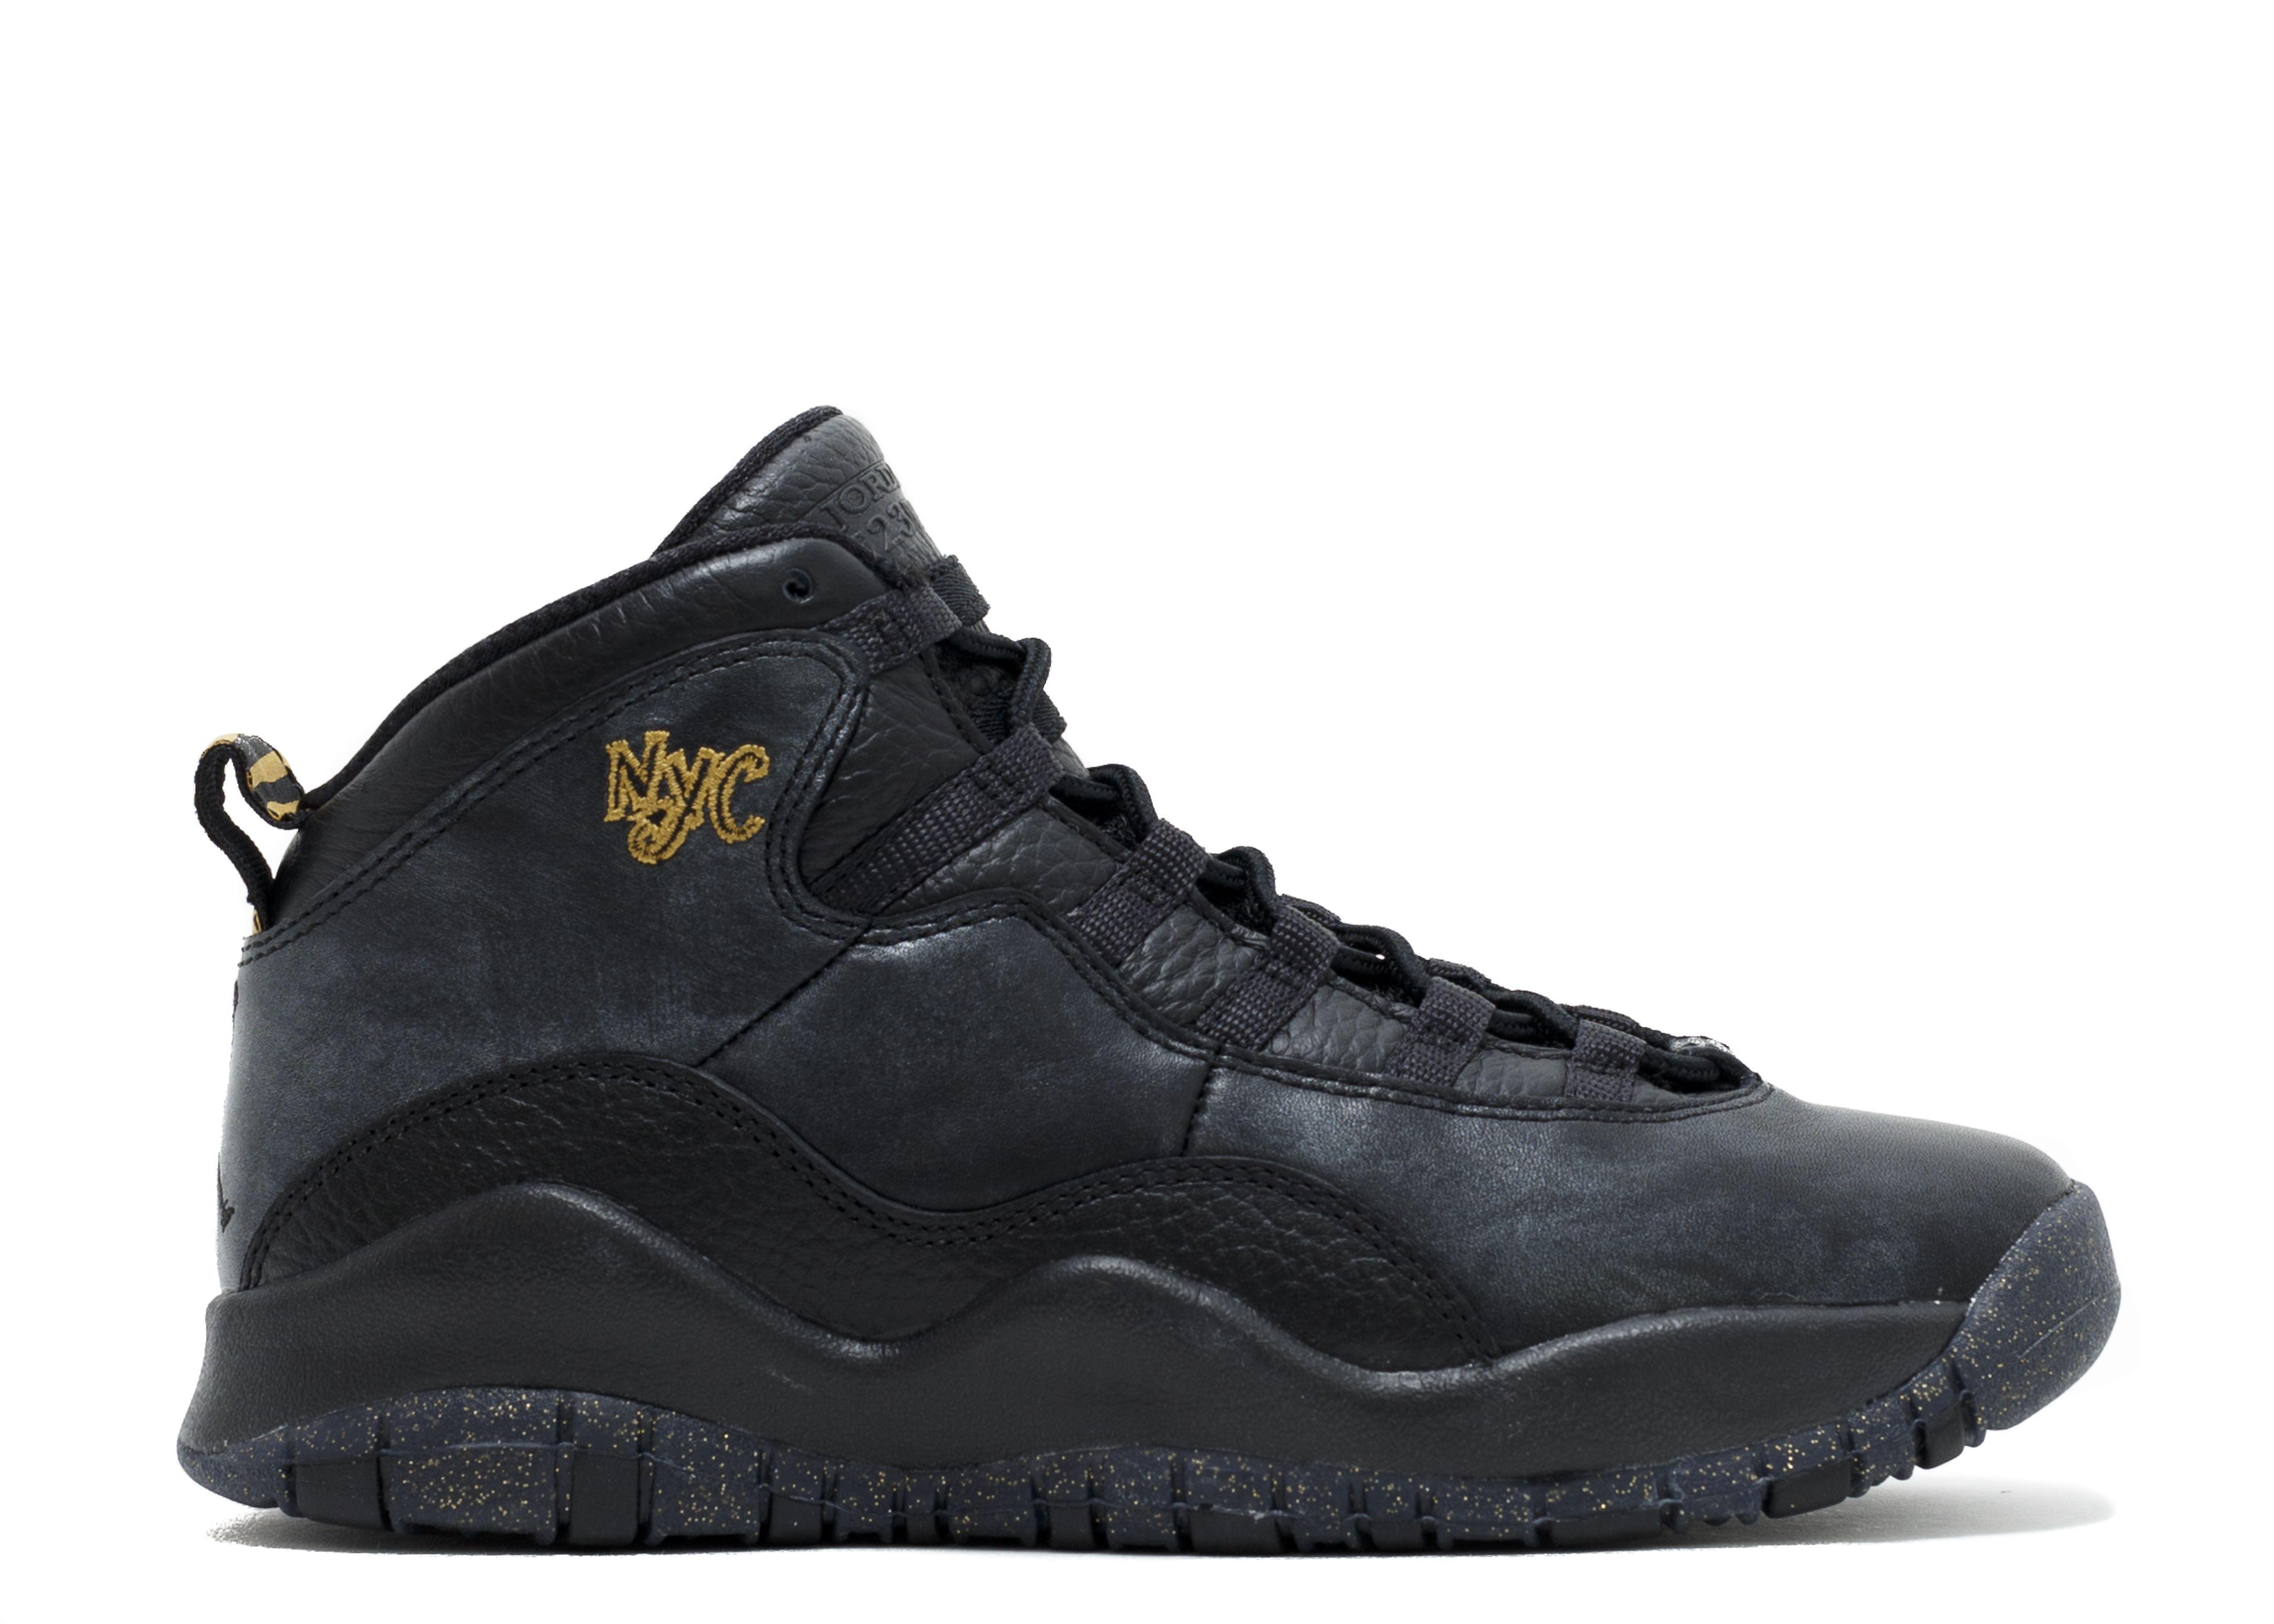 Grey and Black Jordan Logo - Air Jordan 10 (X) Shoes